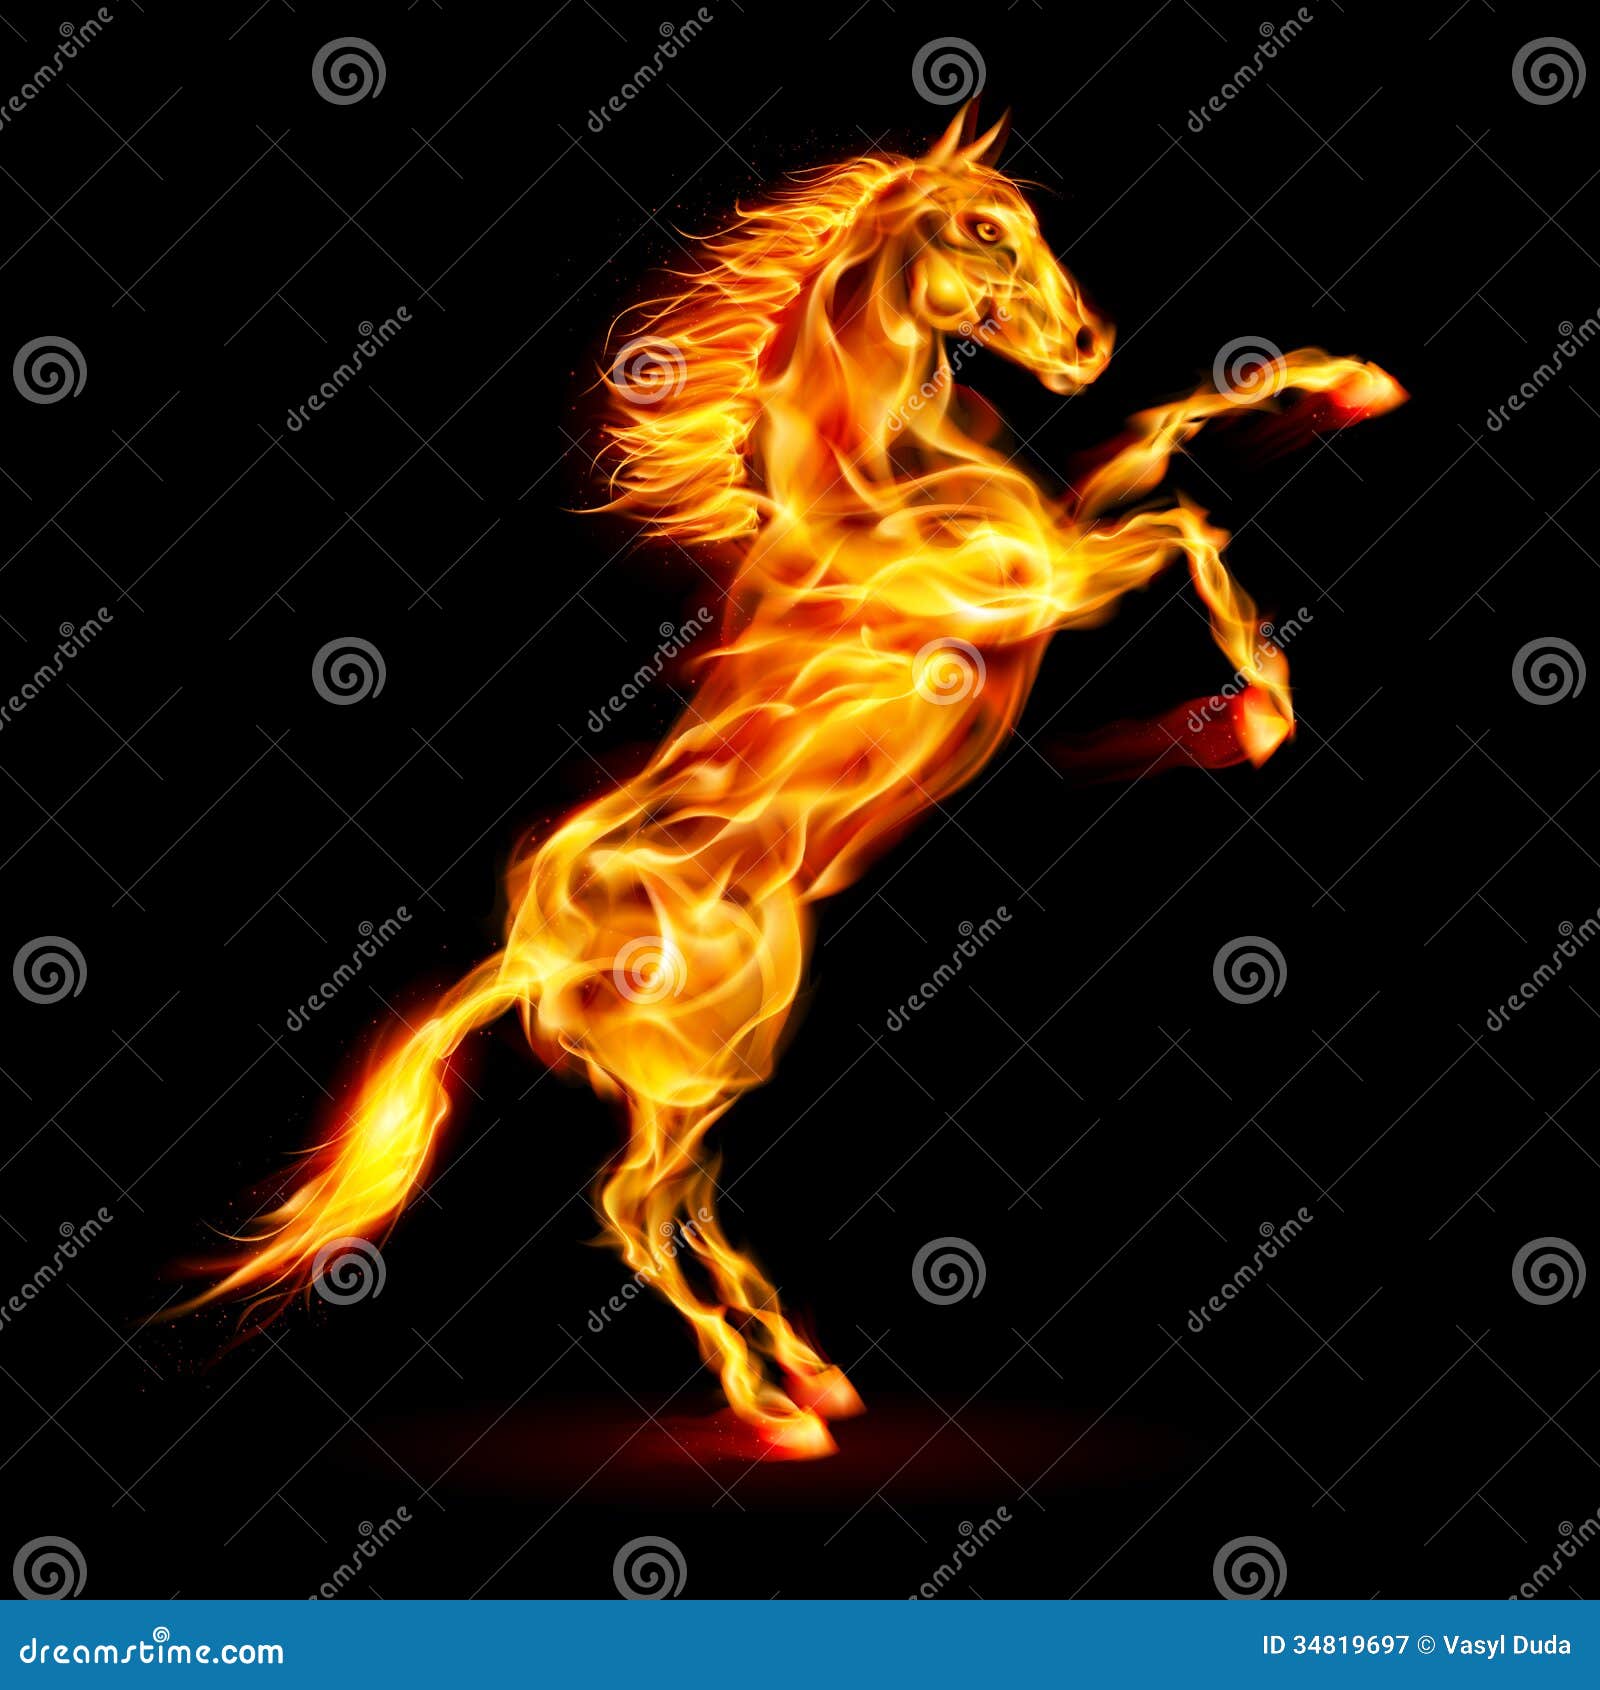 fire horse clipart - photo #9